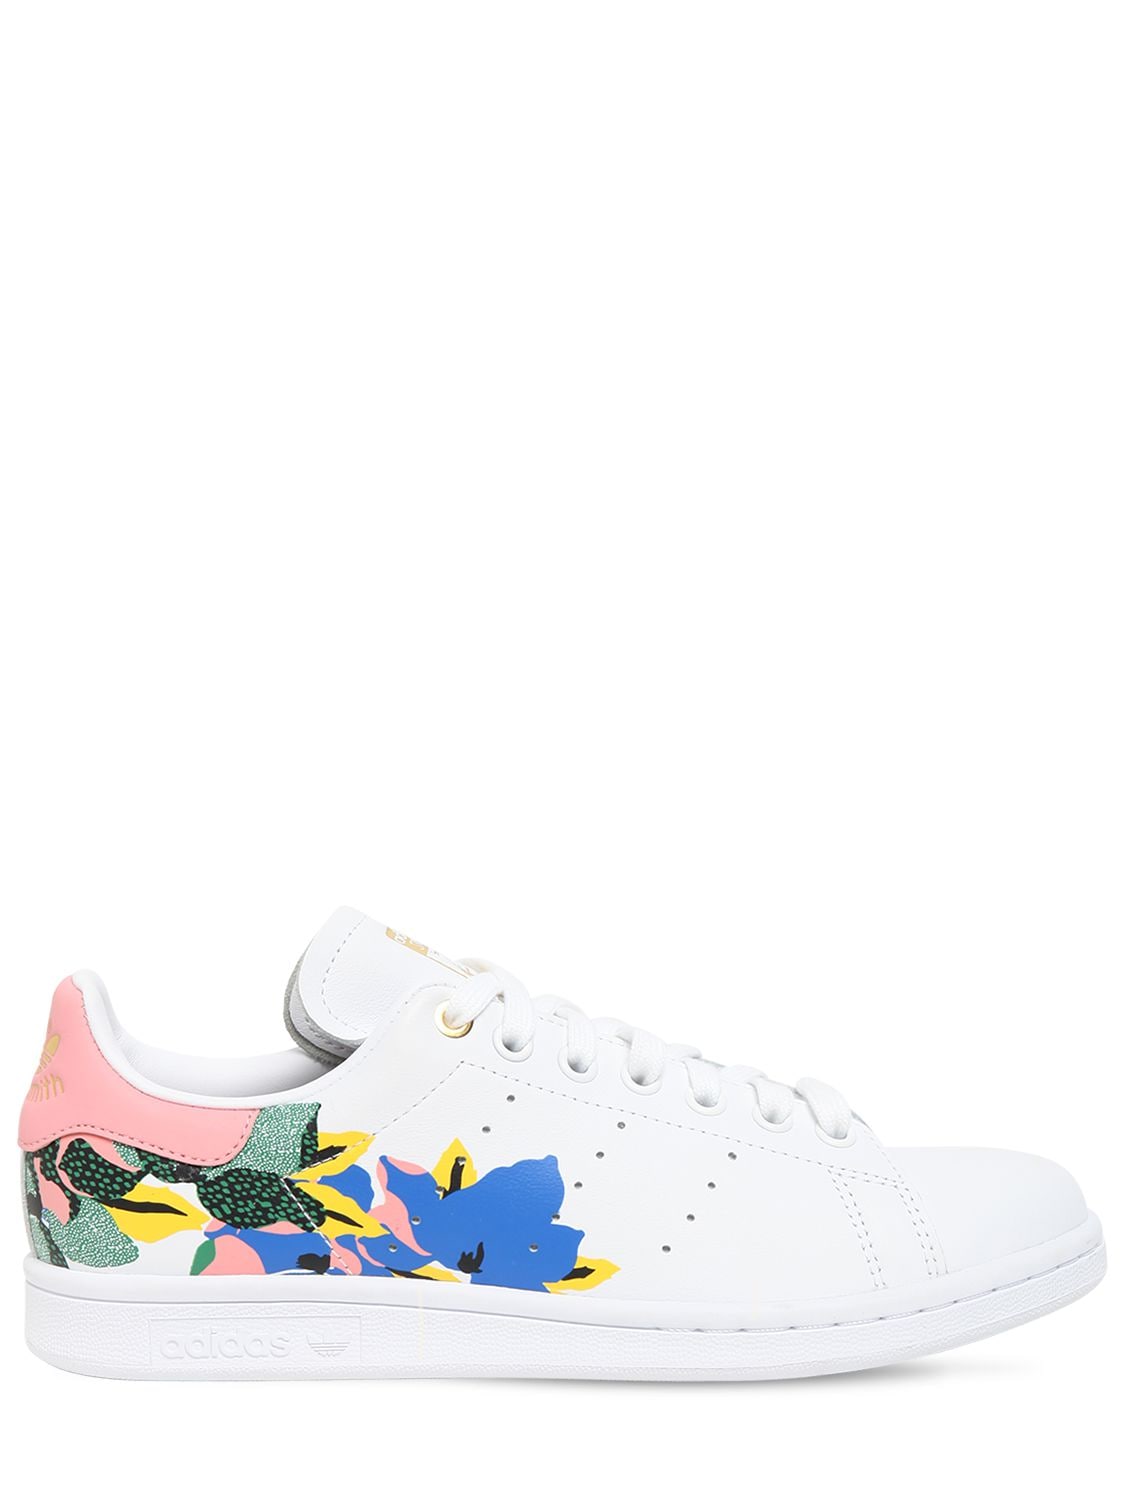 Adidas Originals X Her Studio Stan Smith Sneakers In Floral-multi